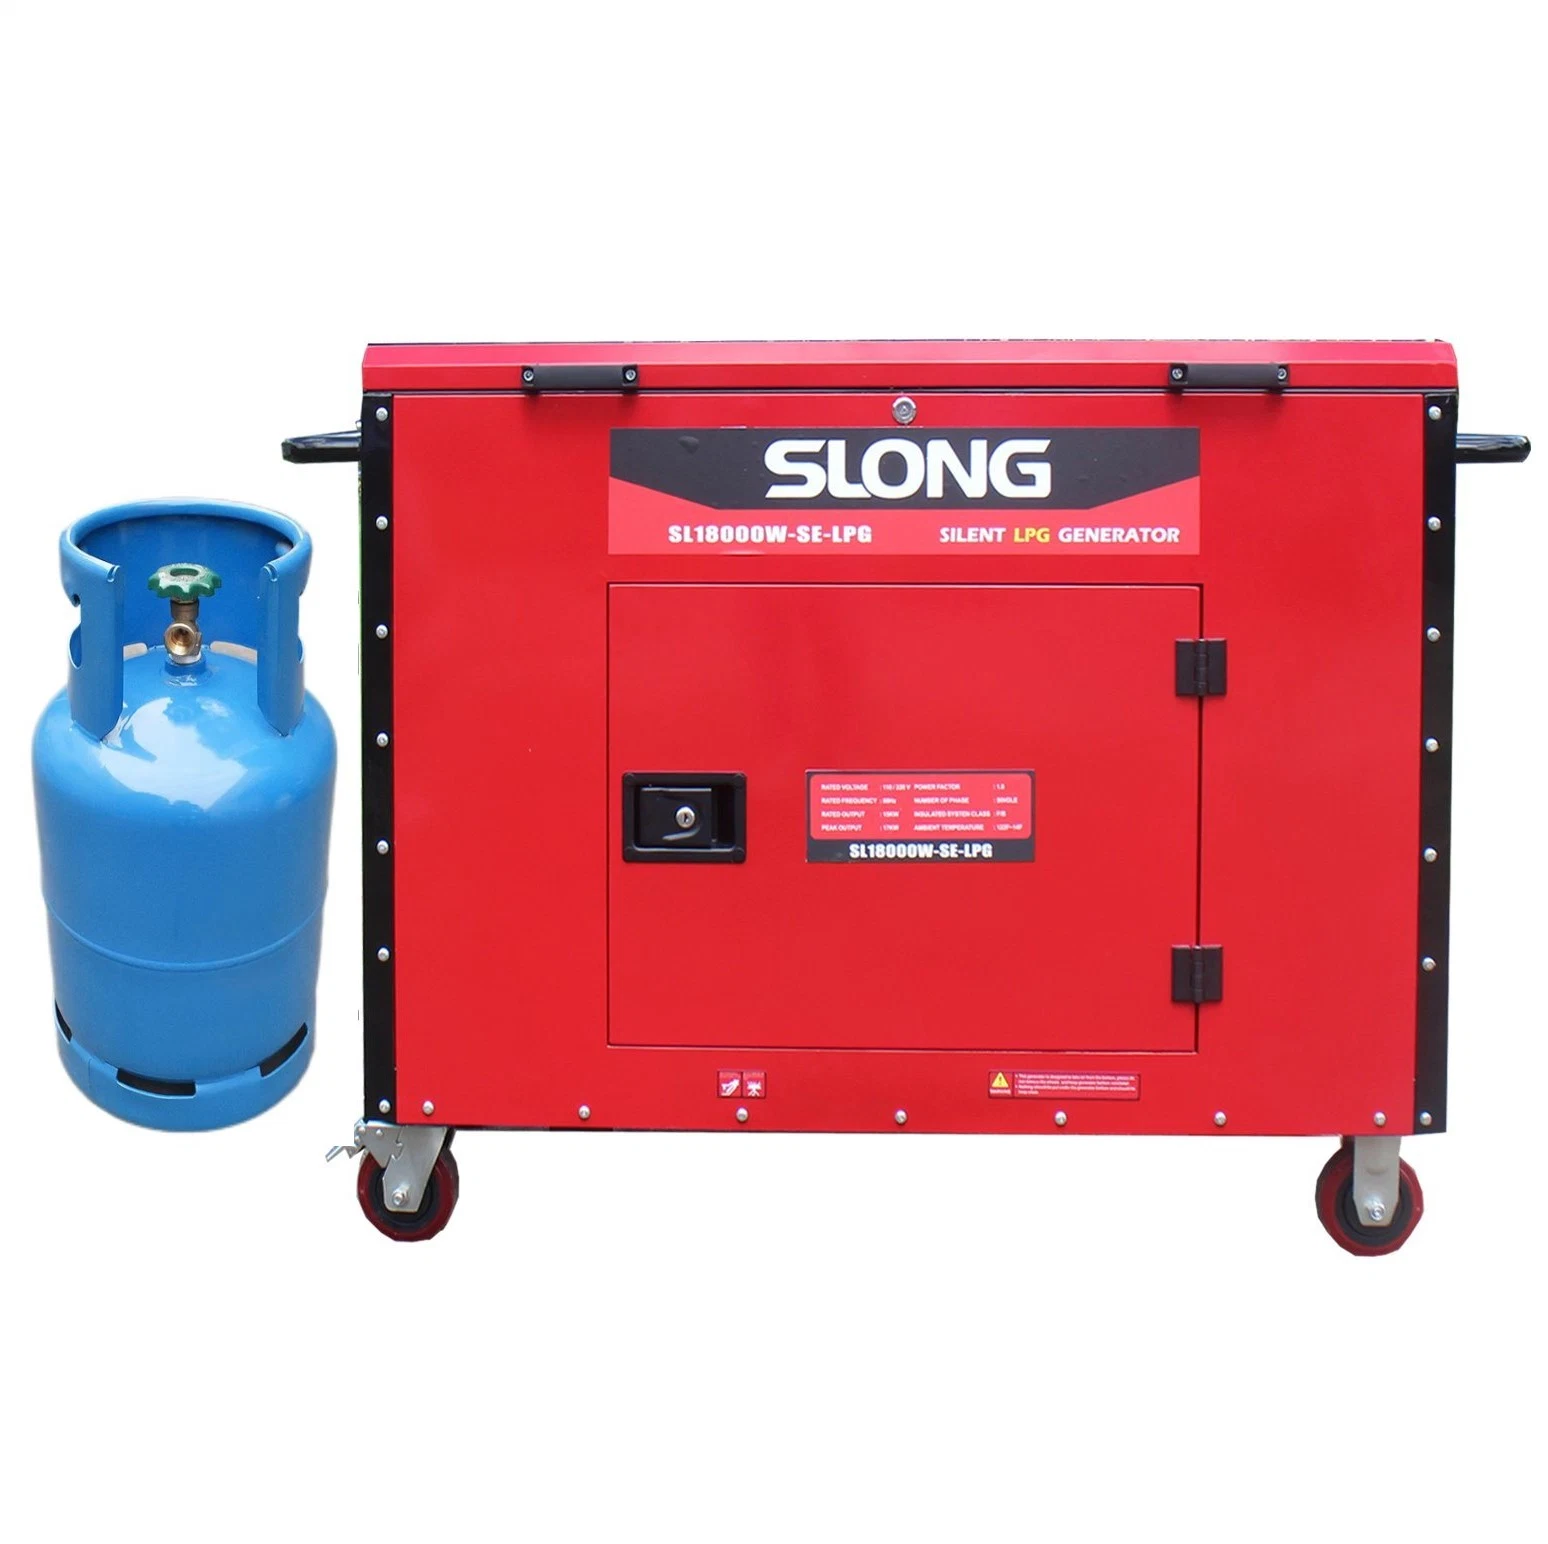 Slong 15kw 17kw Pure Silent LPG Generator Set Natural Gas Generator